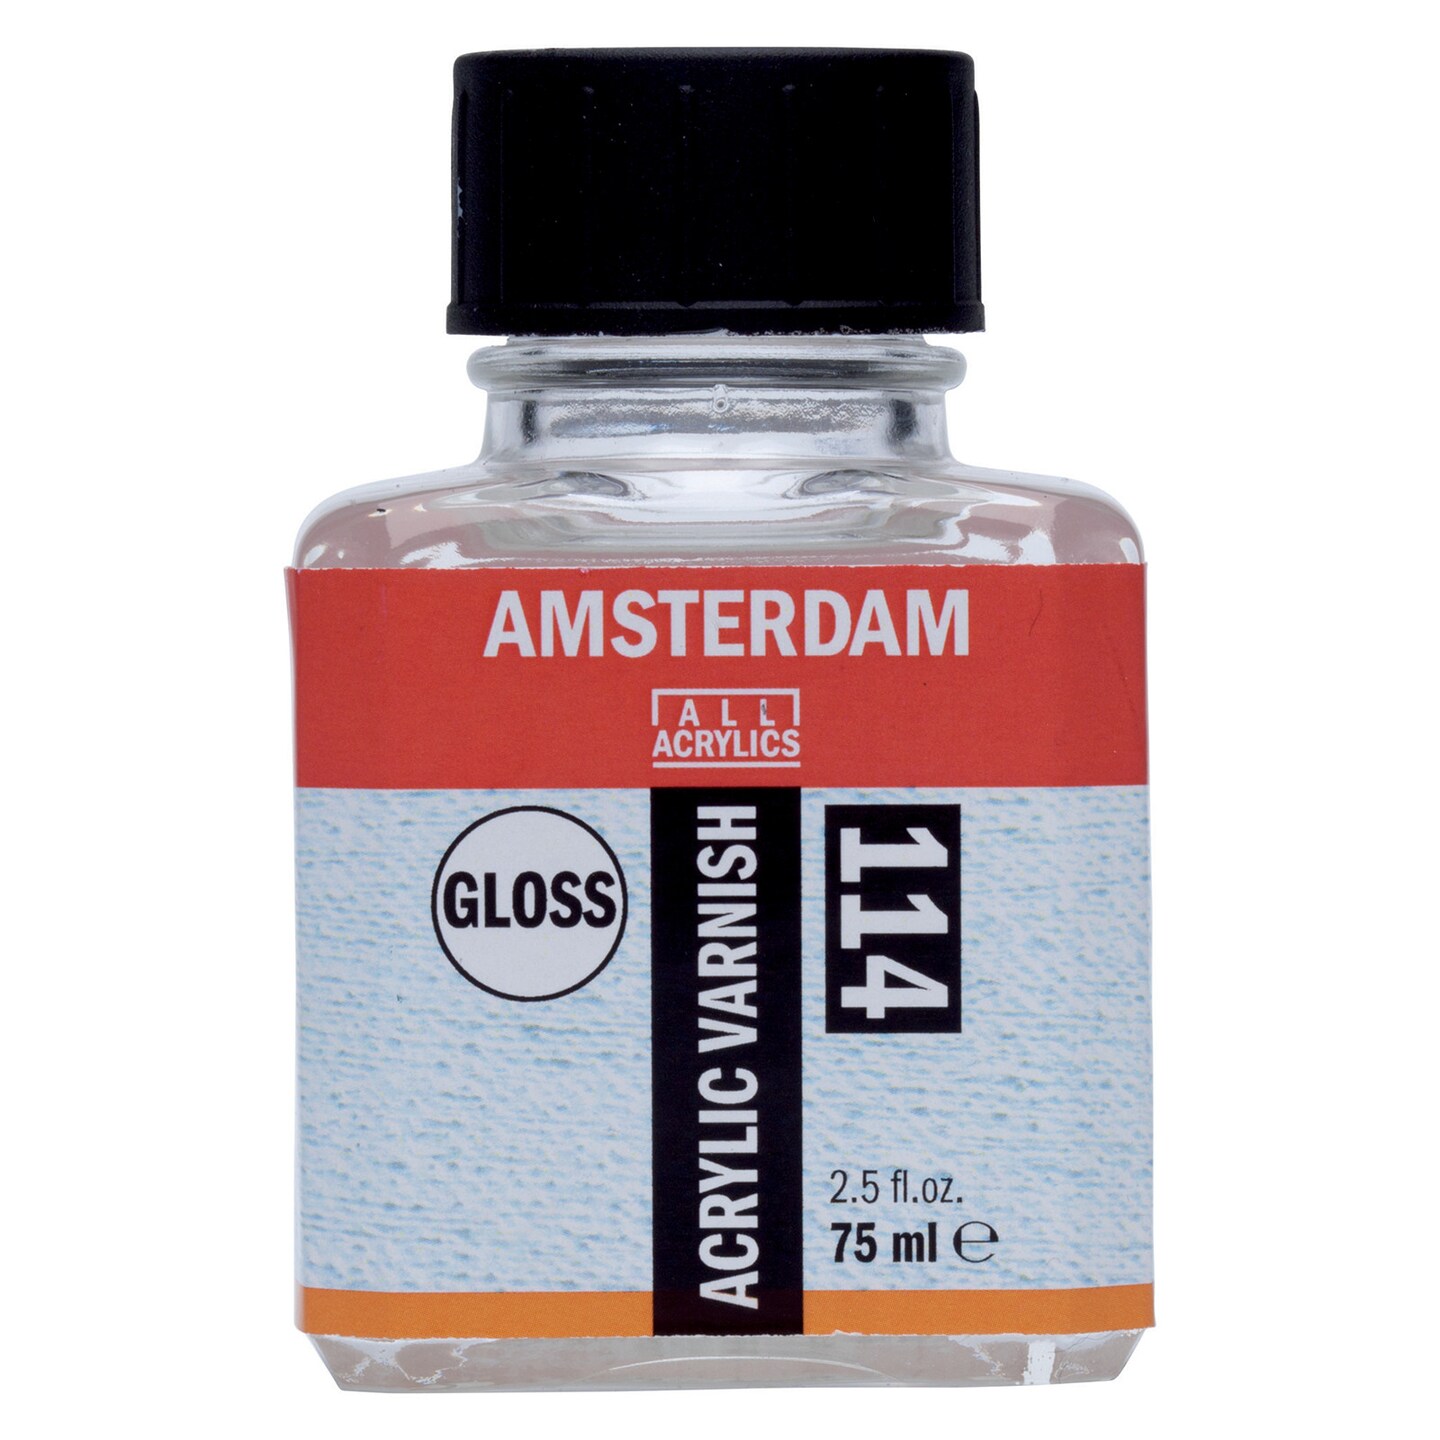 Amsterdam Acrylic Varnish, 75ml, Gloss